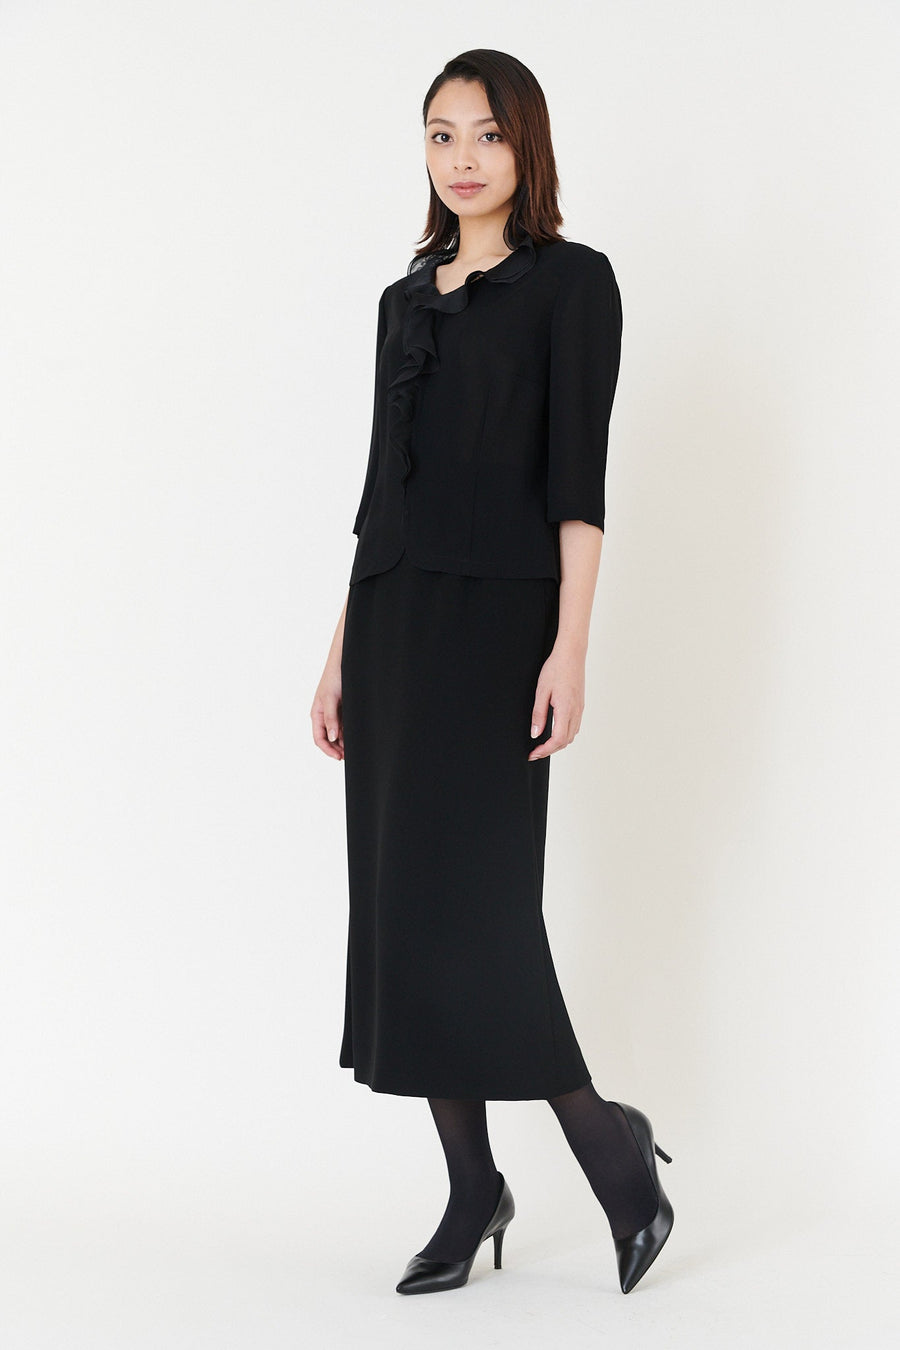 jun ashida Multi Black - ブラックスカート | ONLINE STORE